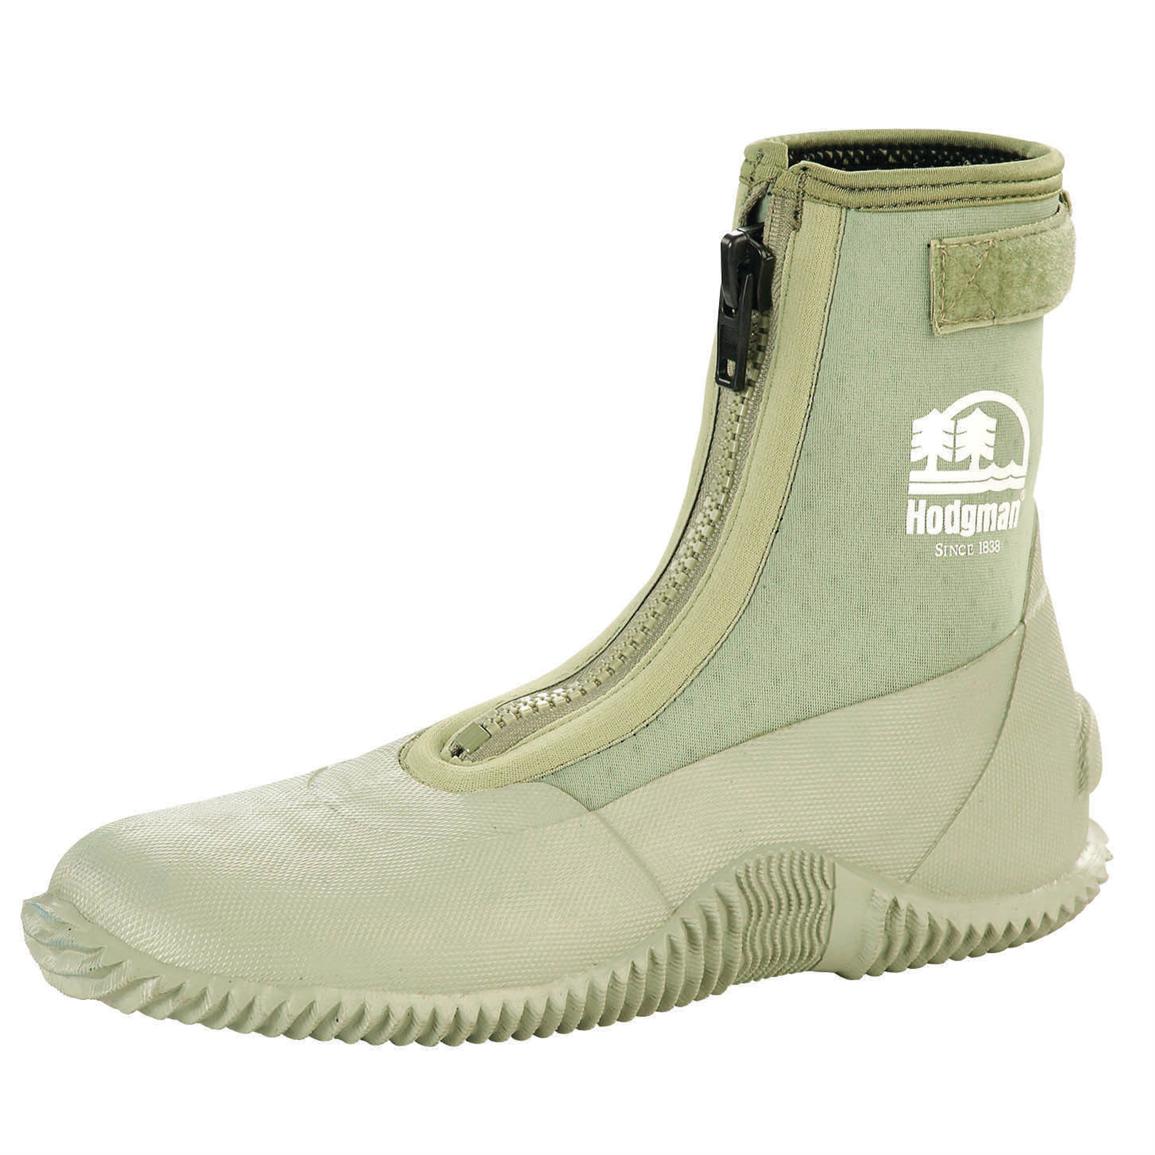 hodgman neoprene wading boots